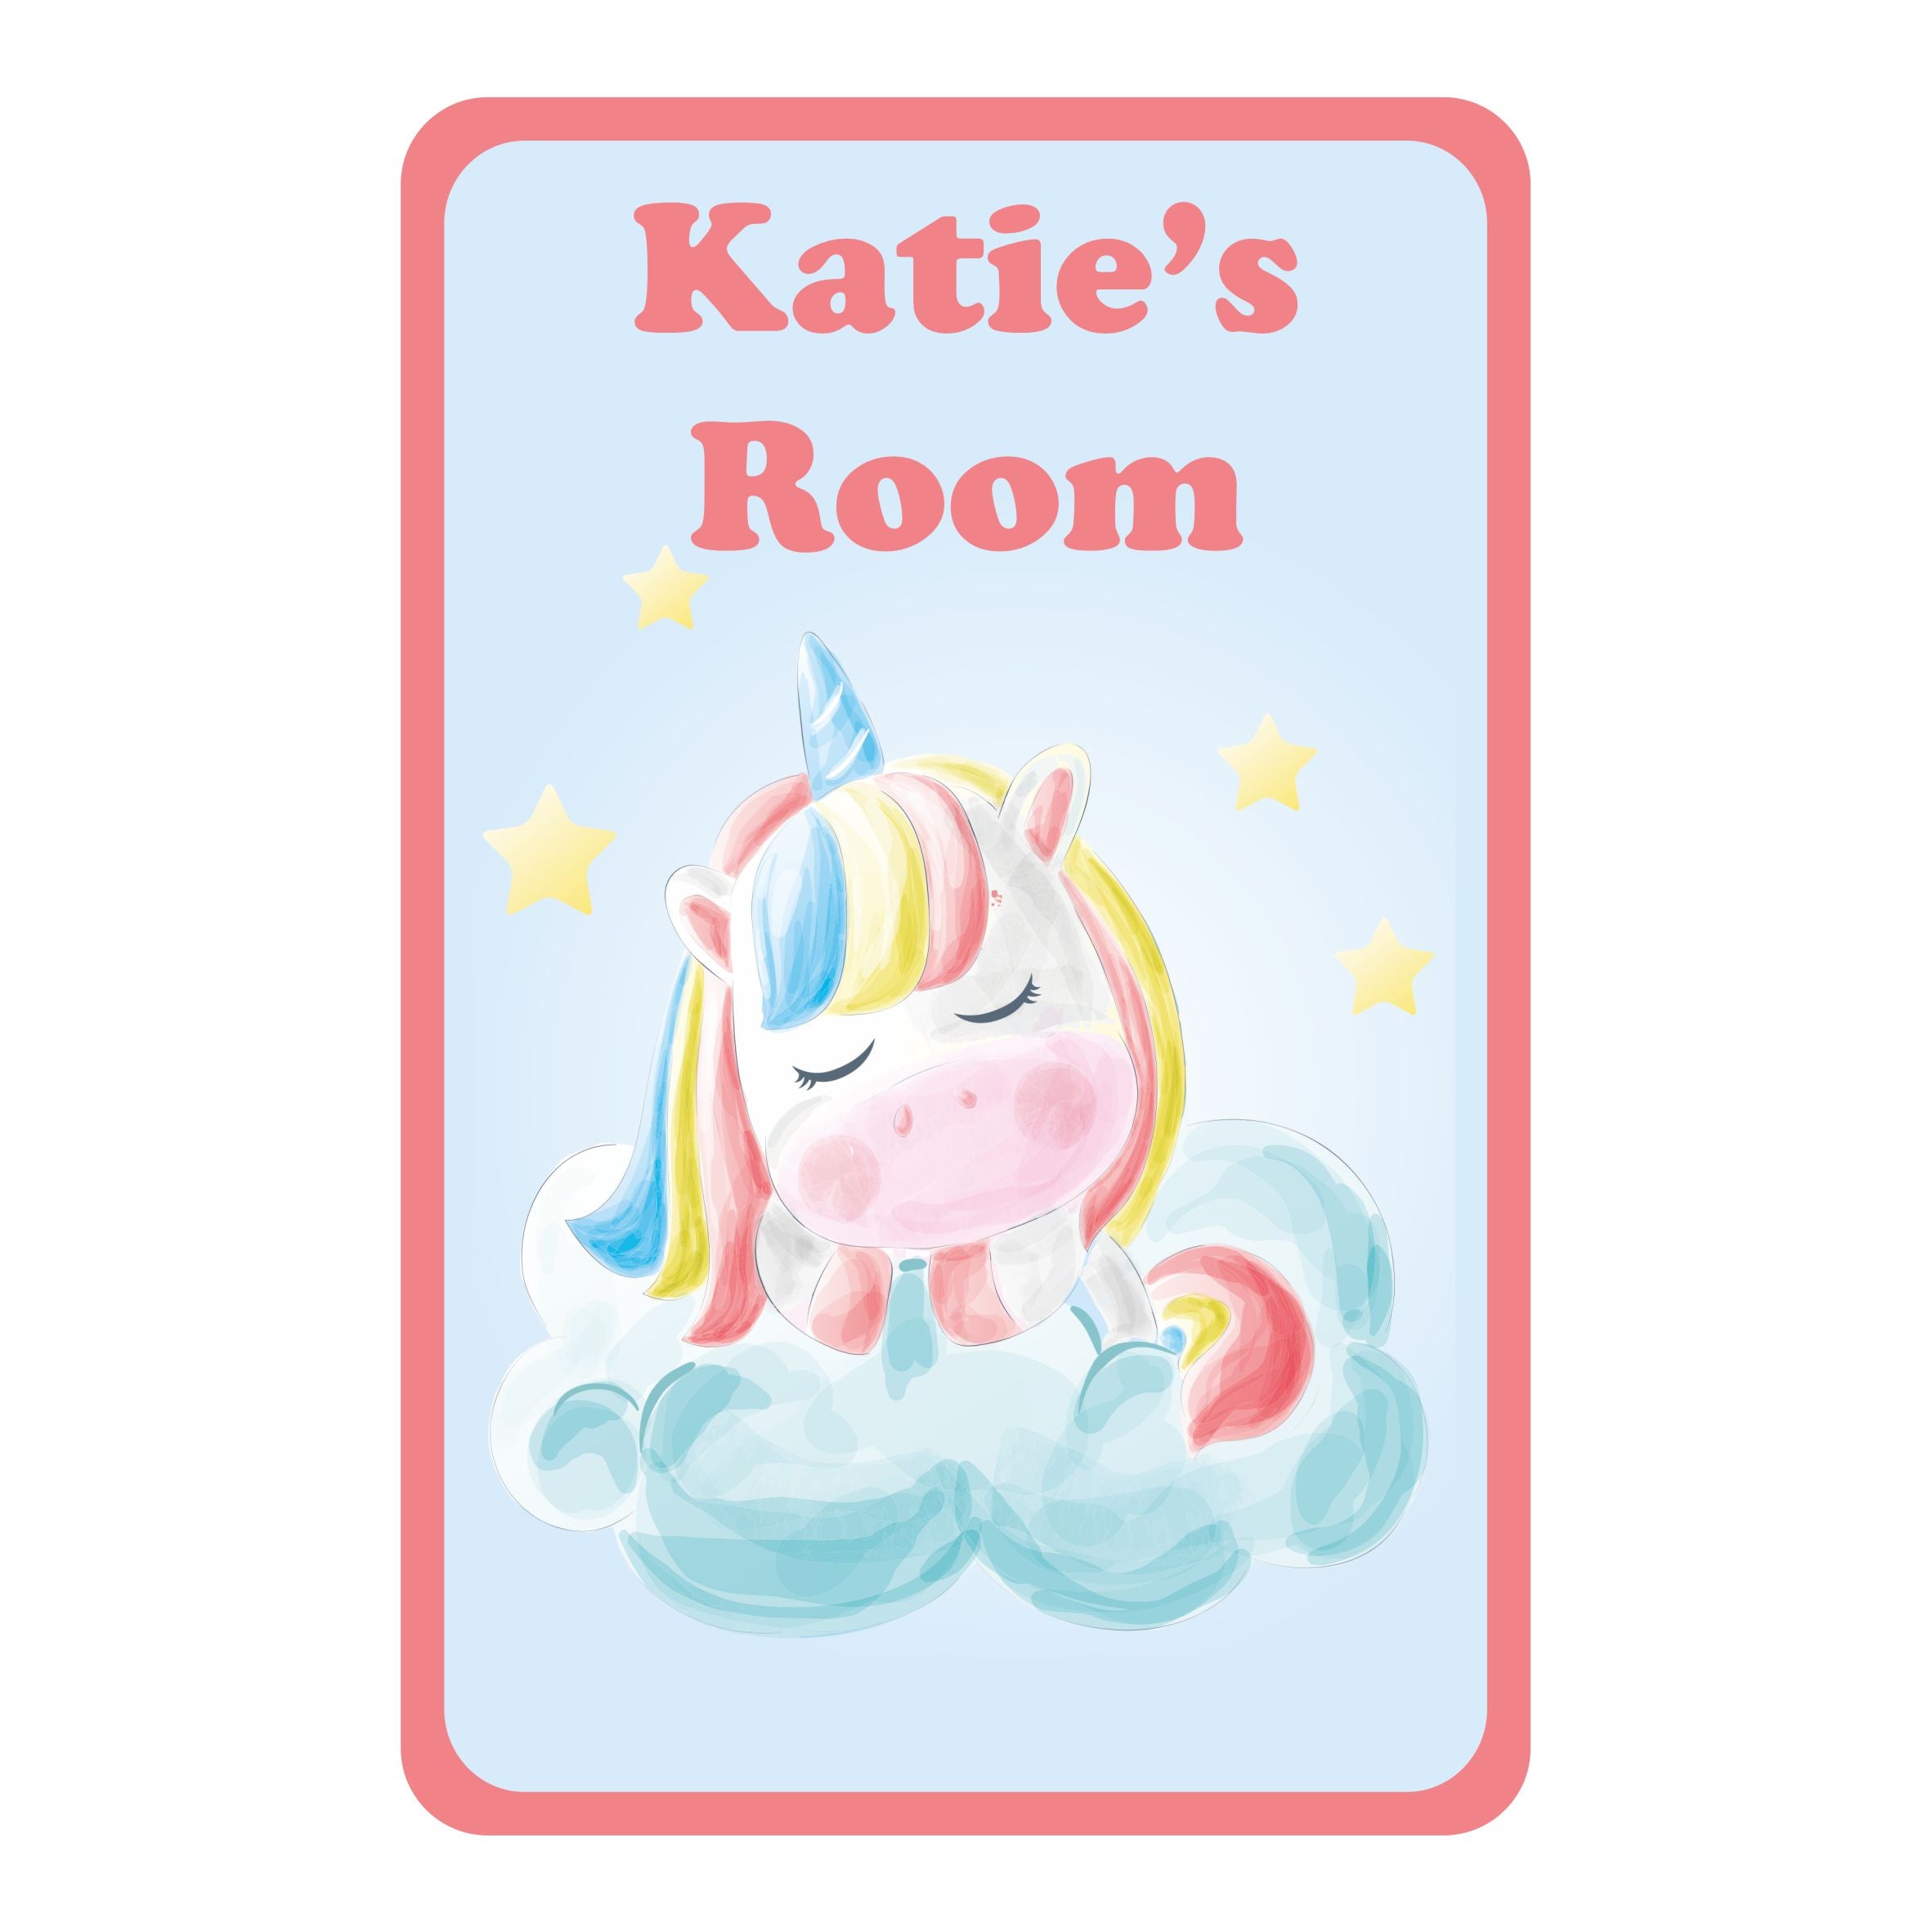 Personalised Unicorn Sleeping on a Cloud Kids Bedroom Door Sign - Unique Gift